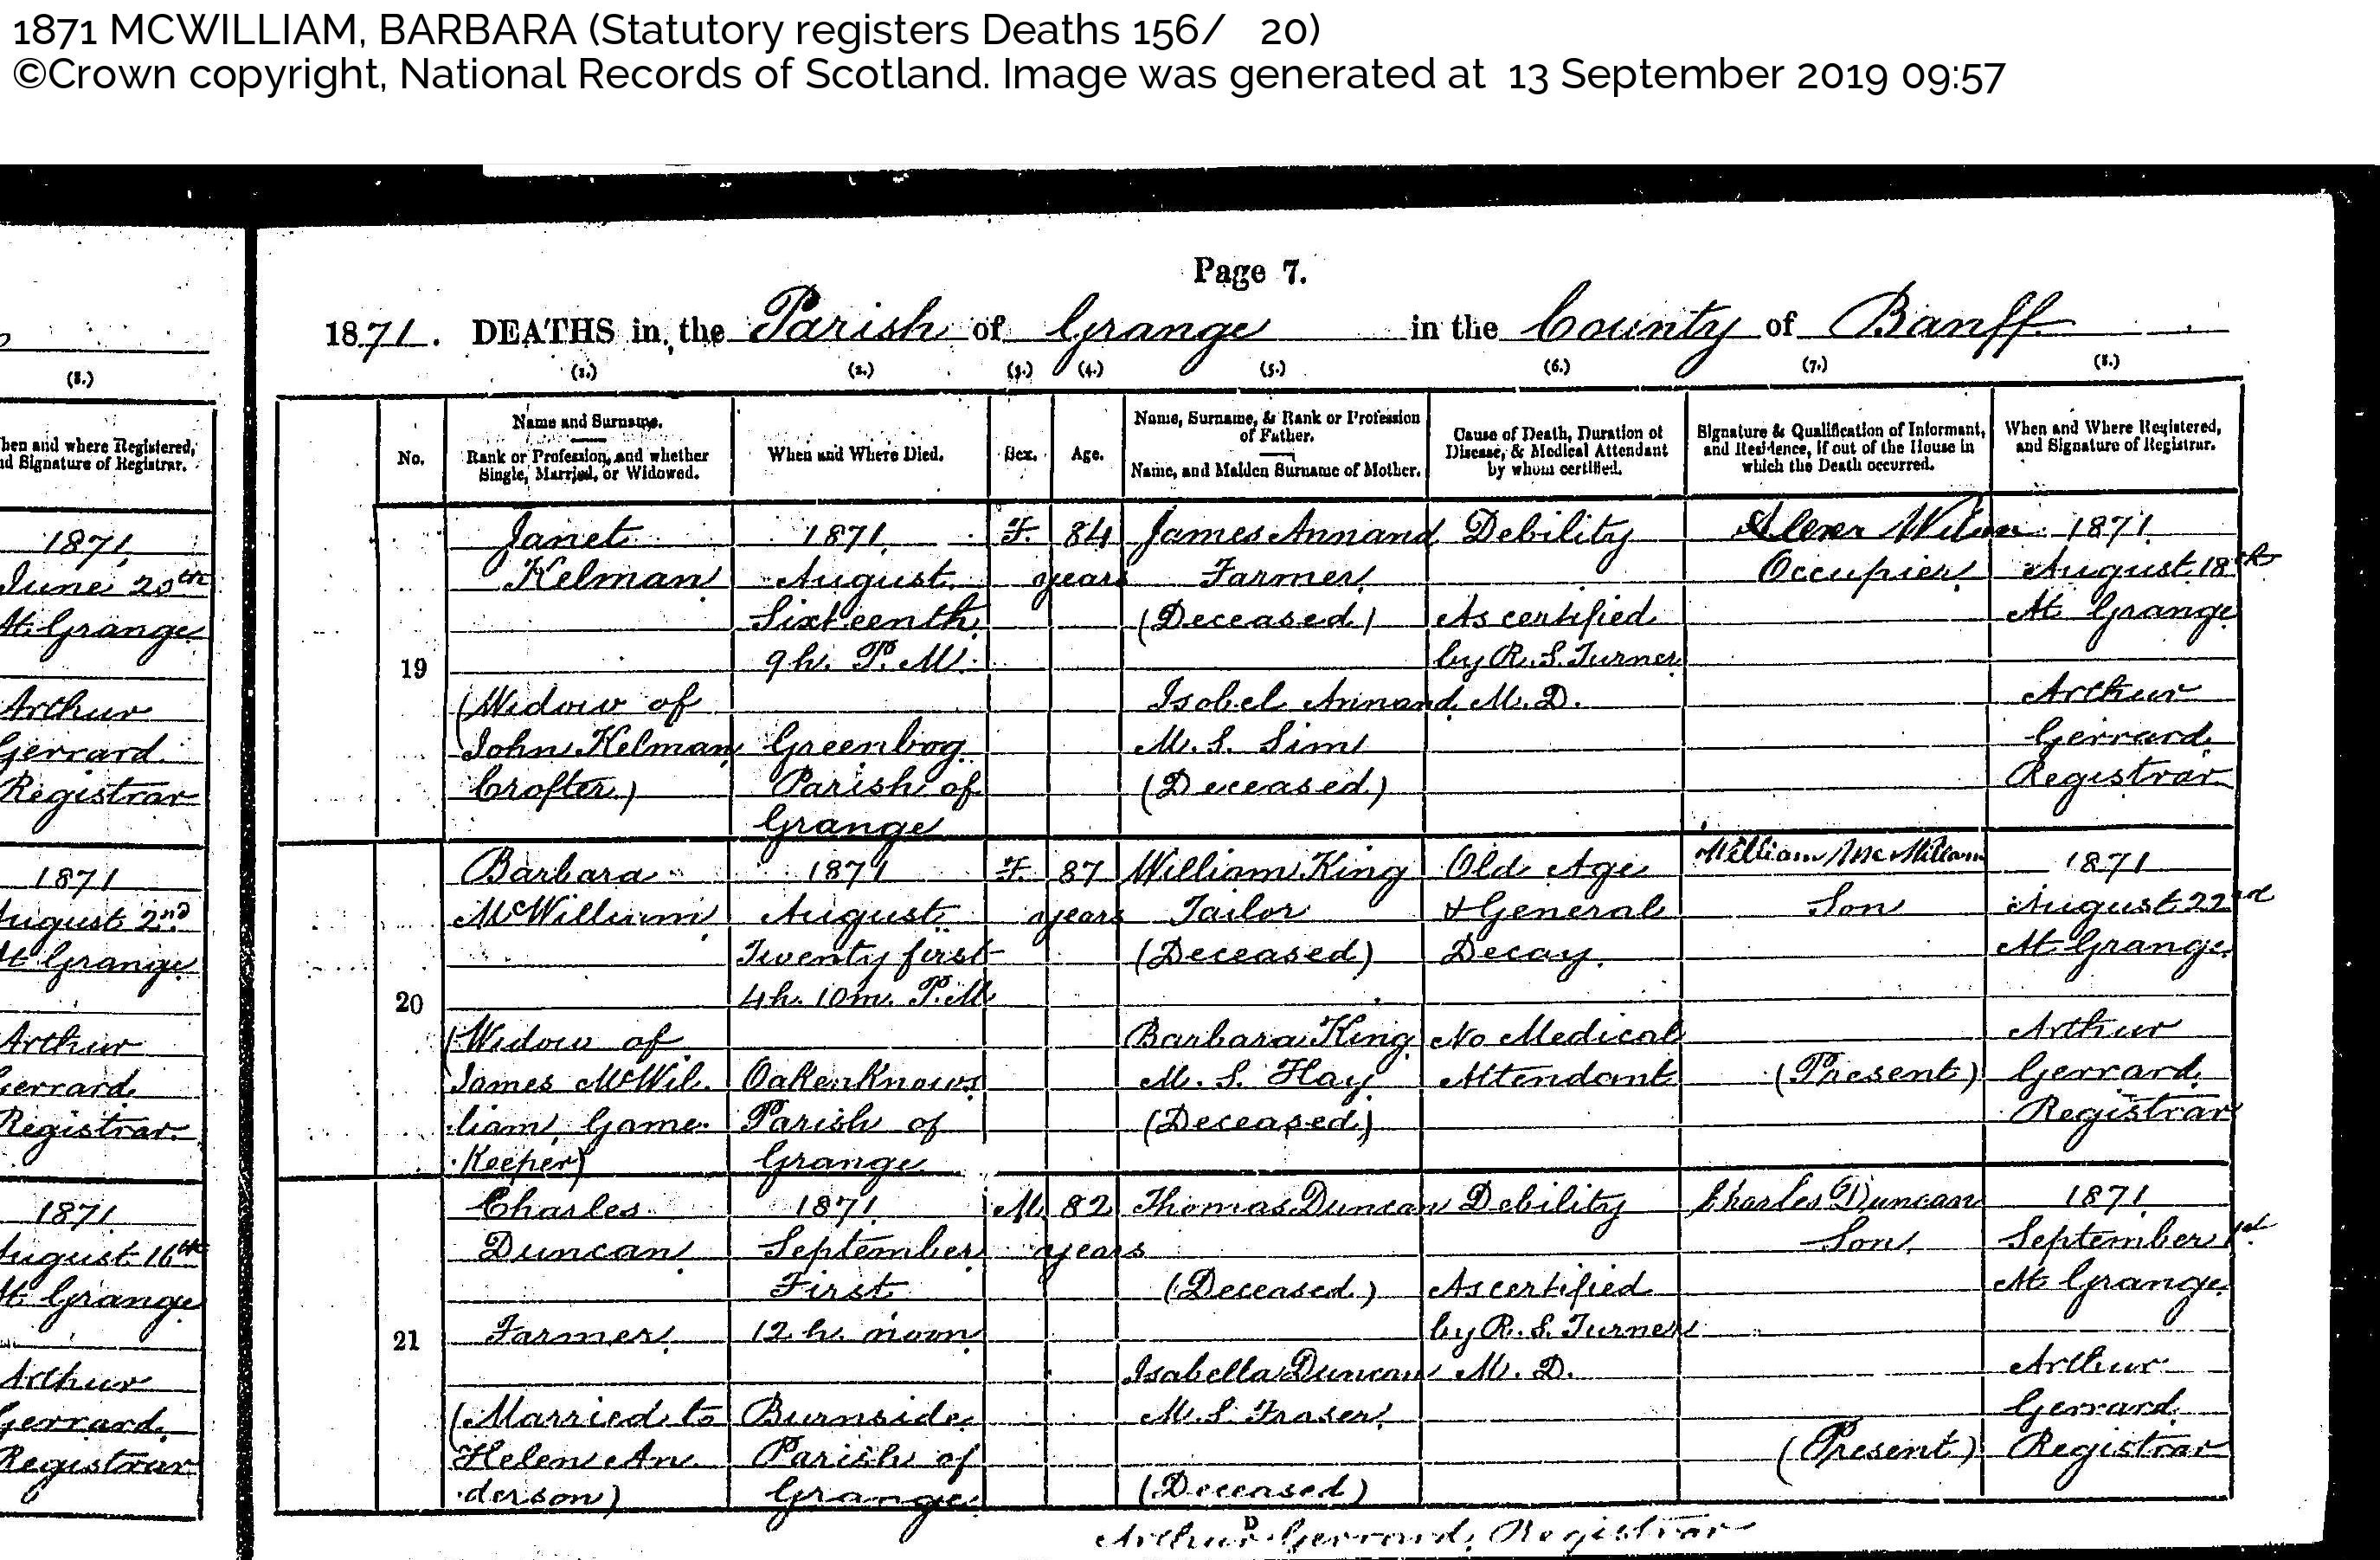 BarbaraKing(McWilliam)_D1871_Grange_Banff, August 21, 1871, Linked To: <a href='i62.html' >Barbara King</a>